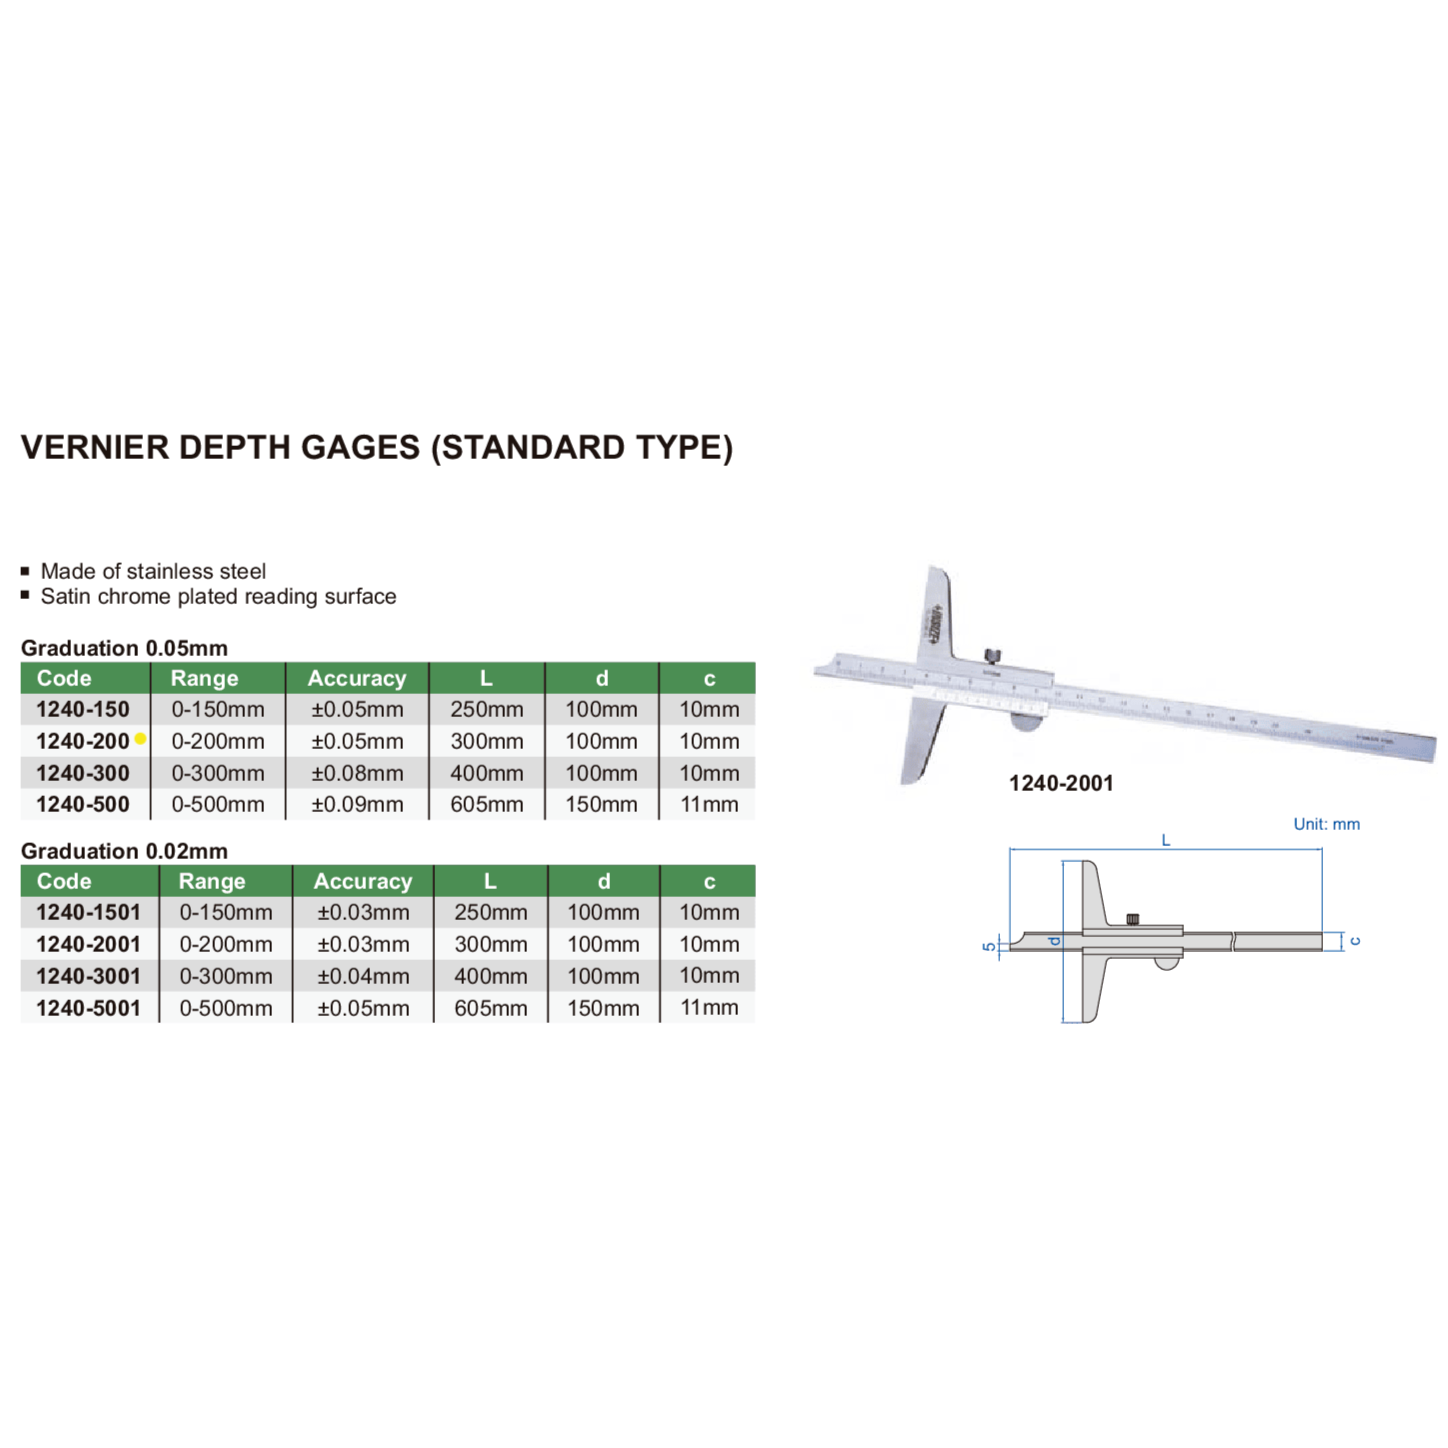 Insize Vernier Depth Gauge 0-200mm Range Series 1240-200